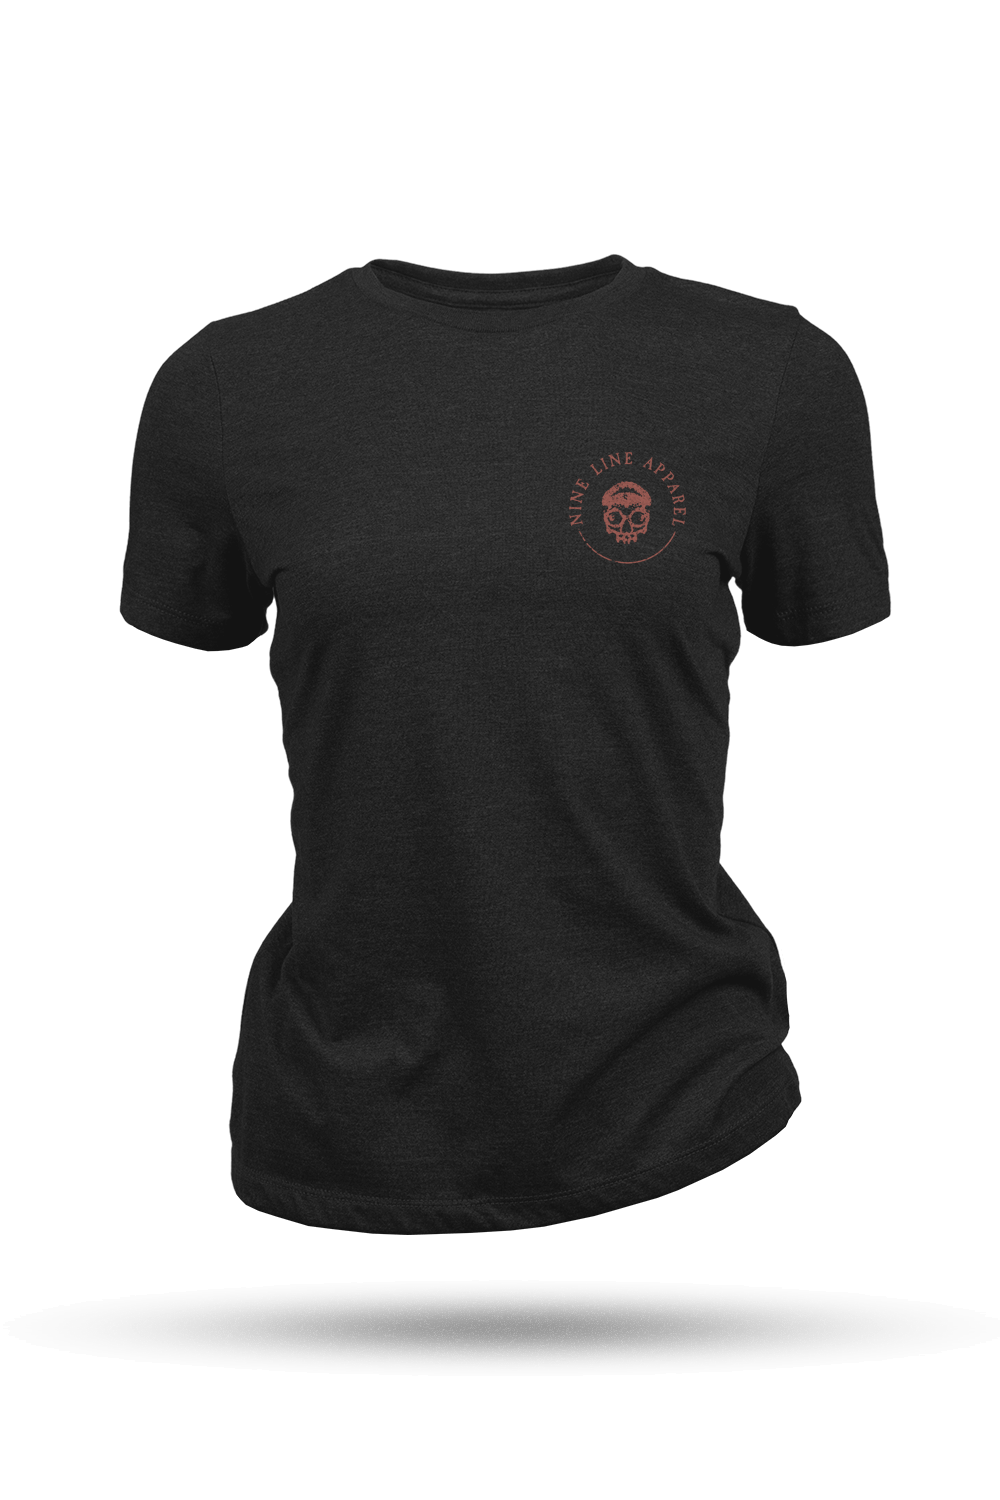 Women's Tri-Blend T-Shirt - Death Moth